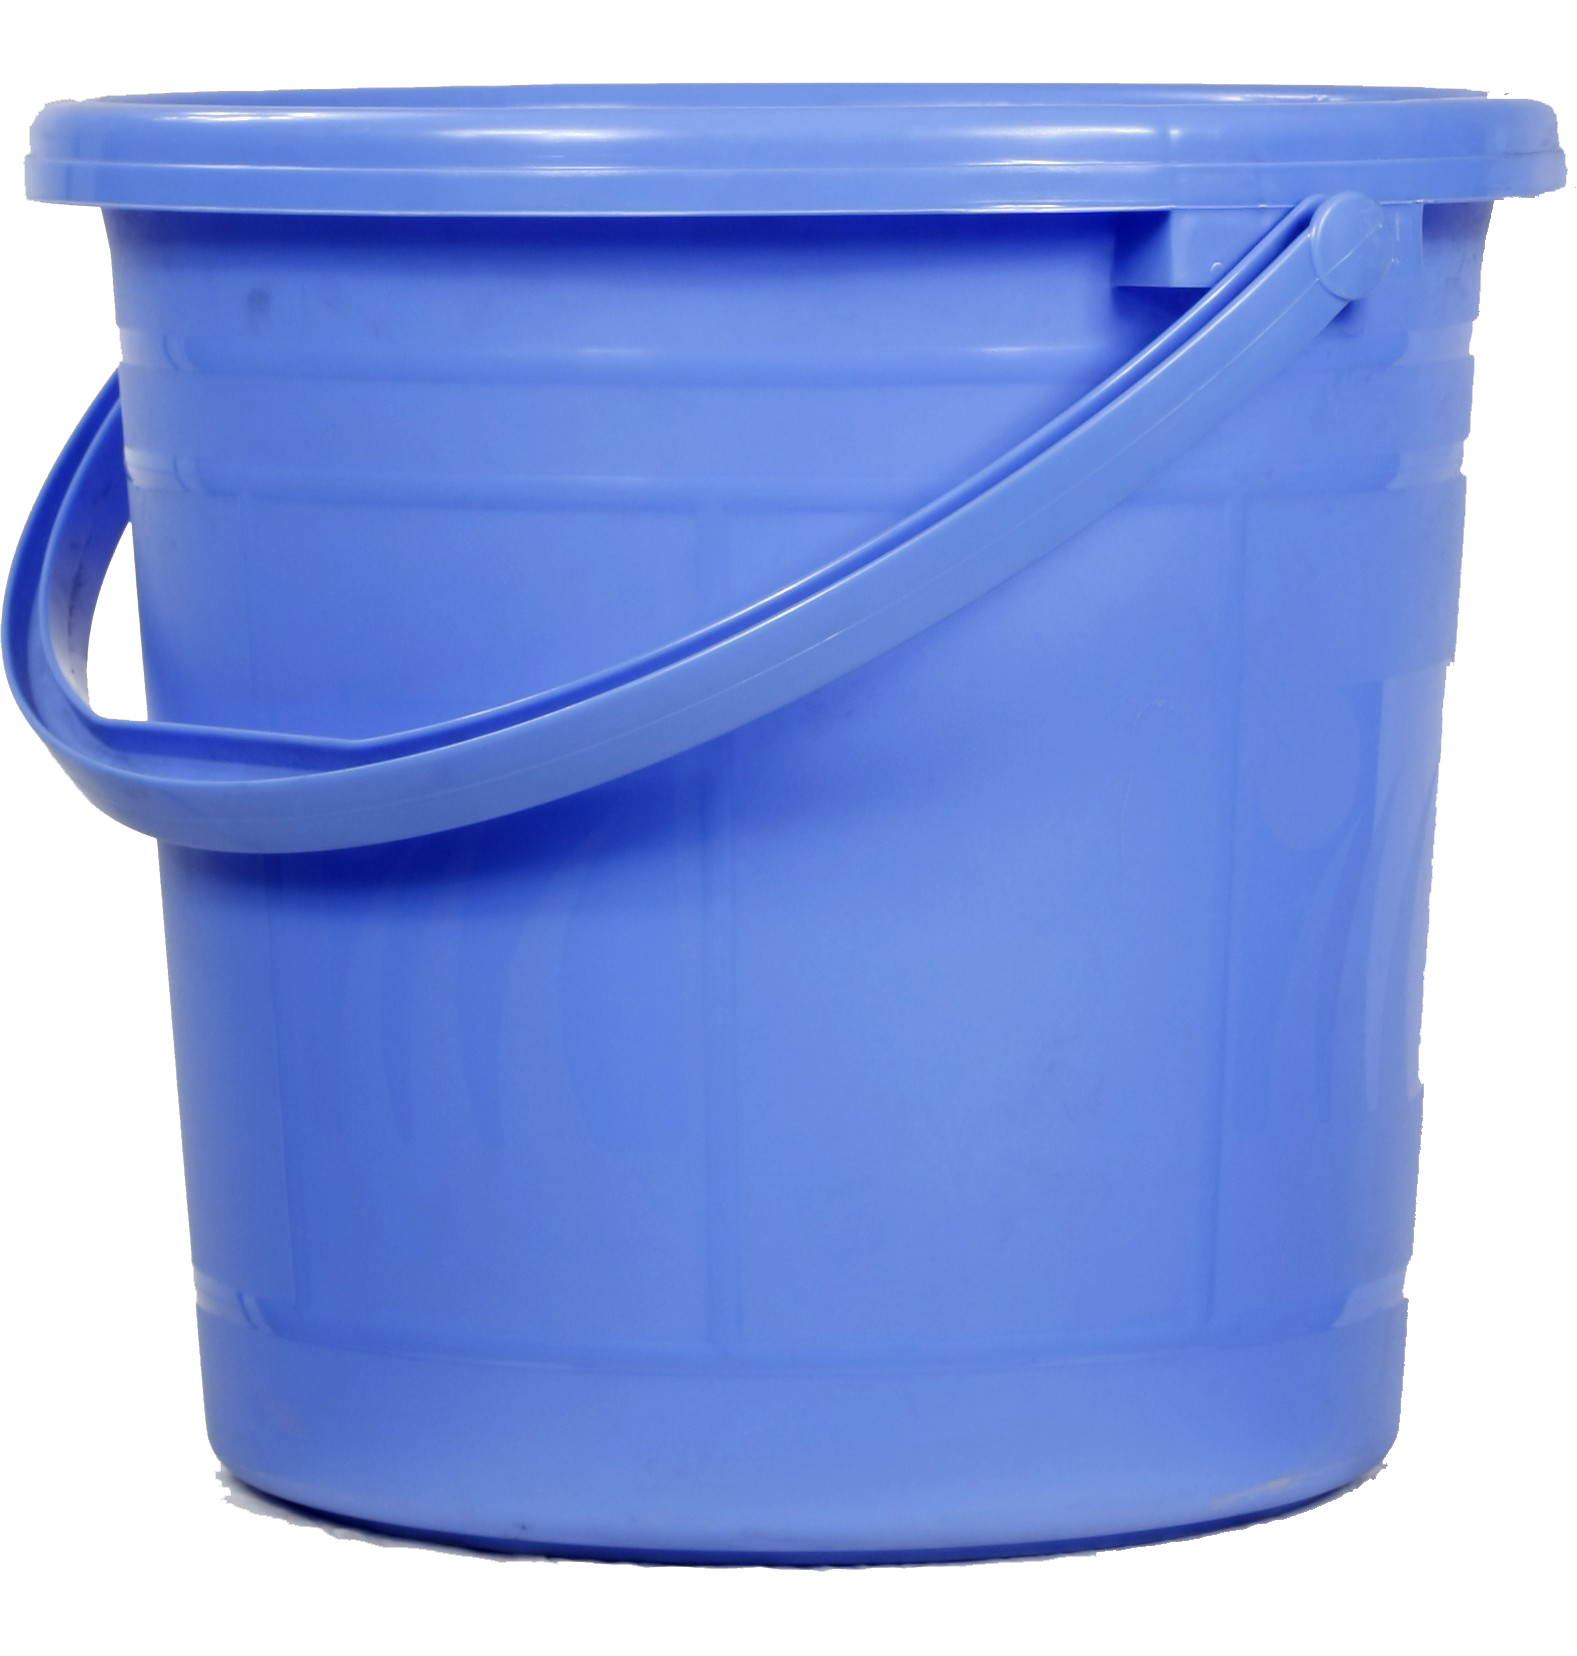 Plastic Bucket File PNG Image